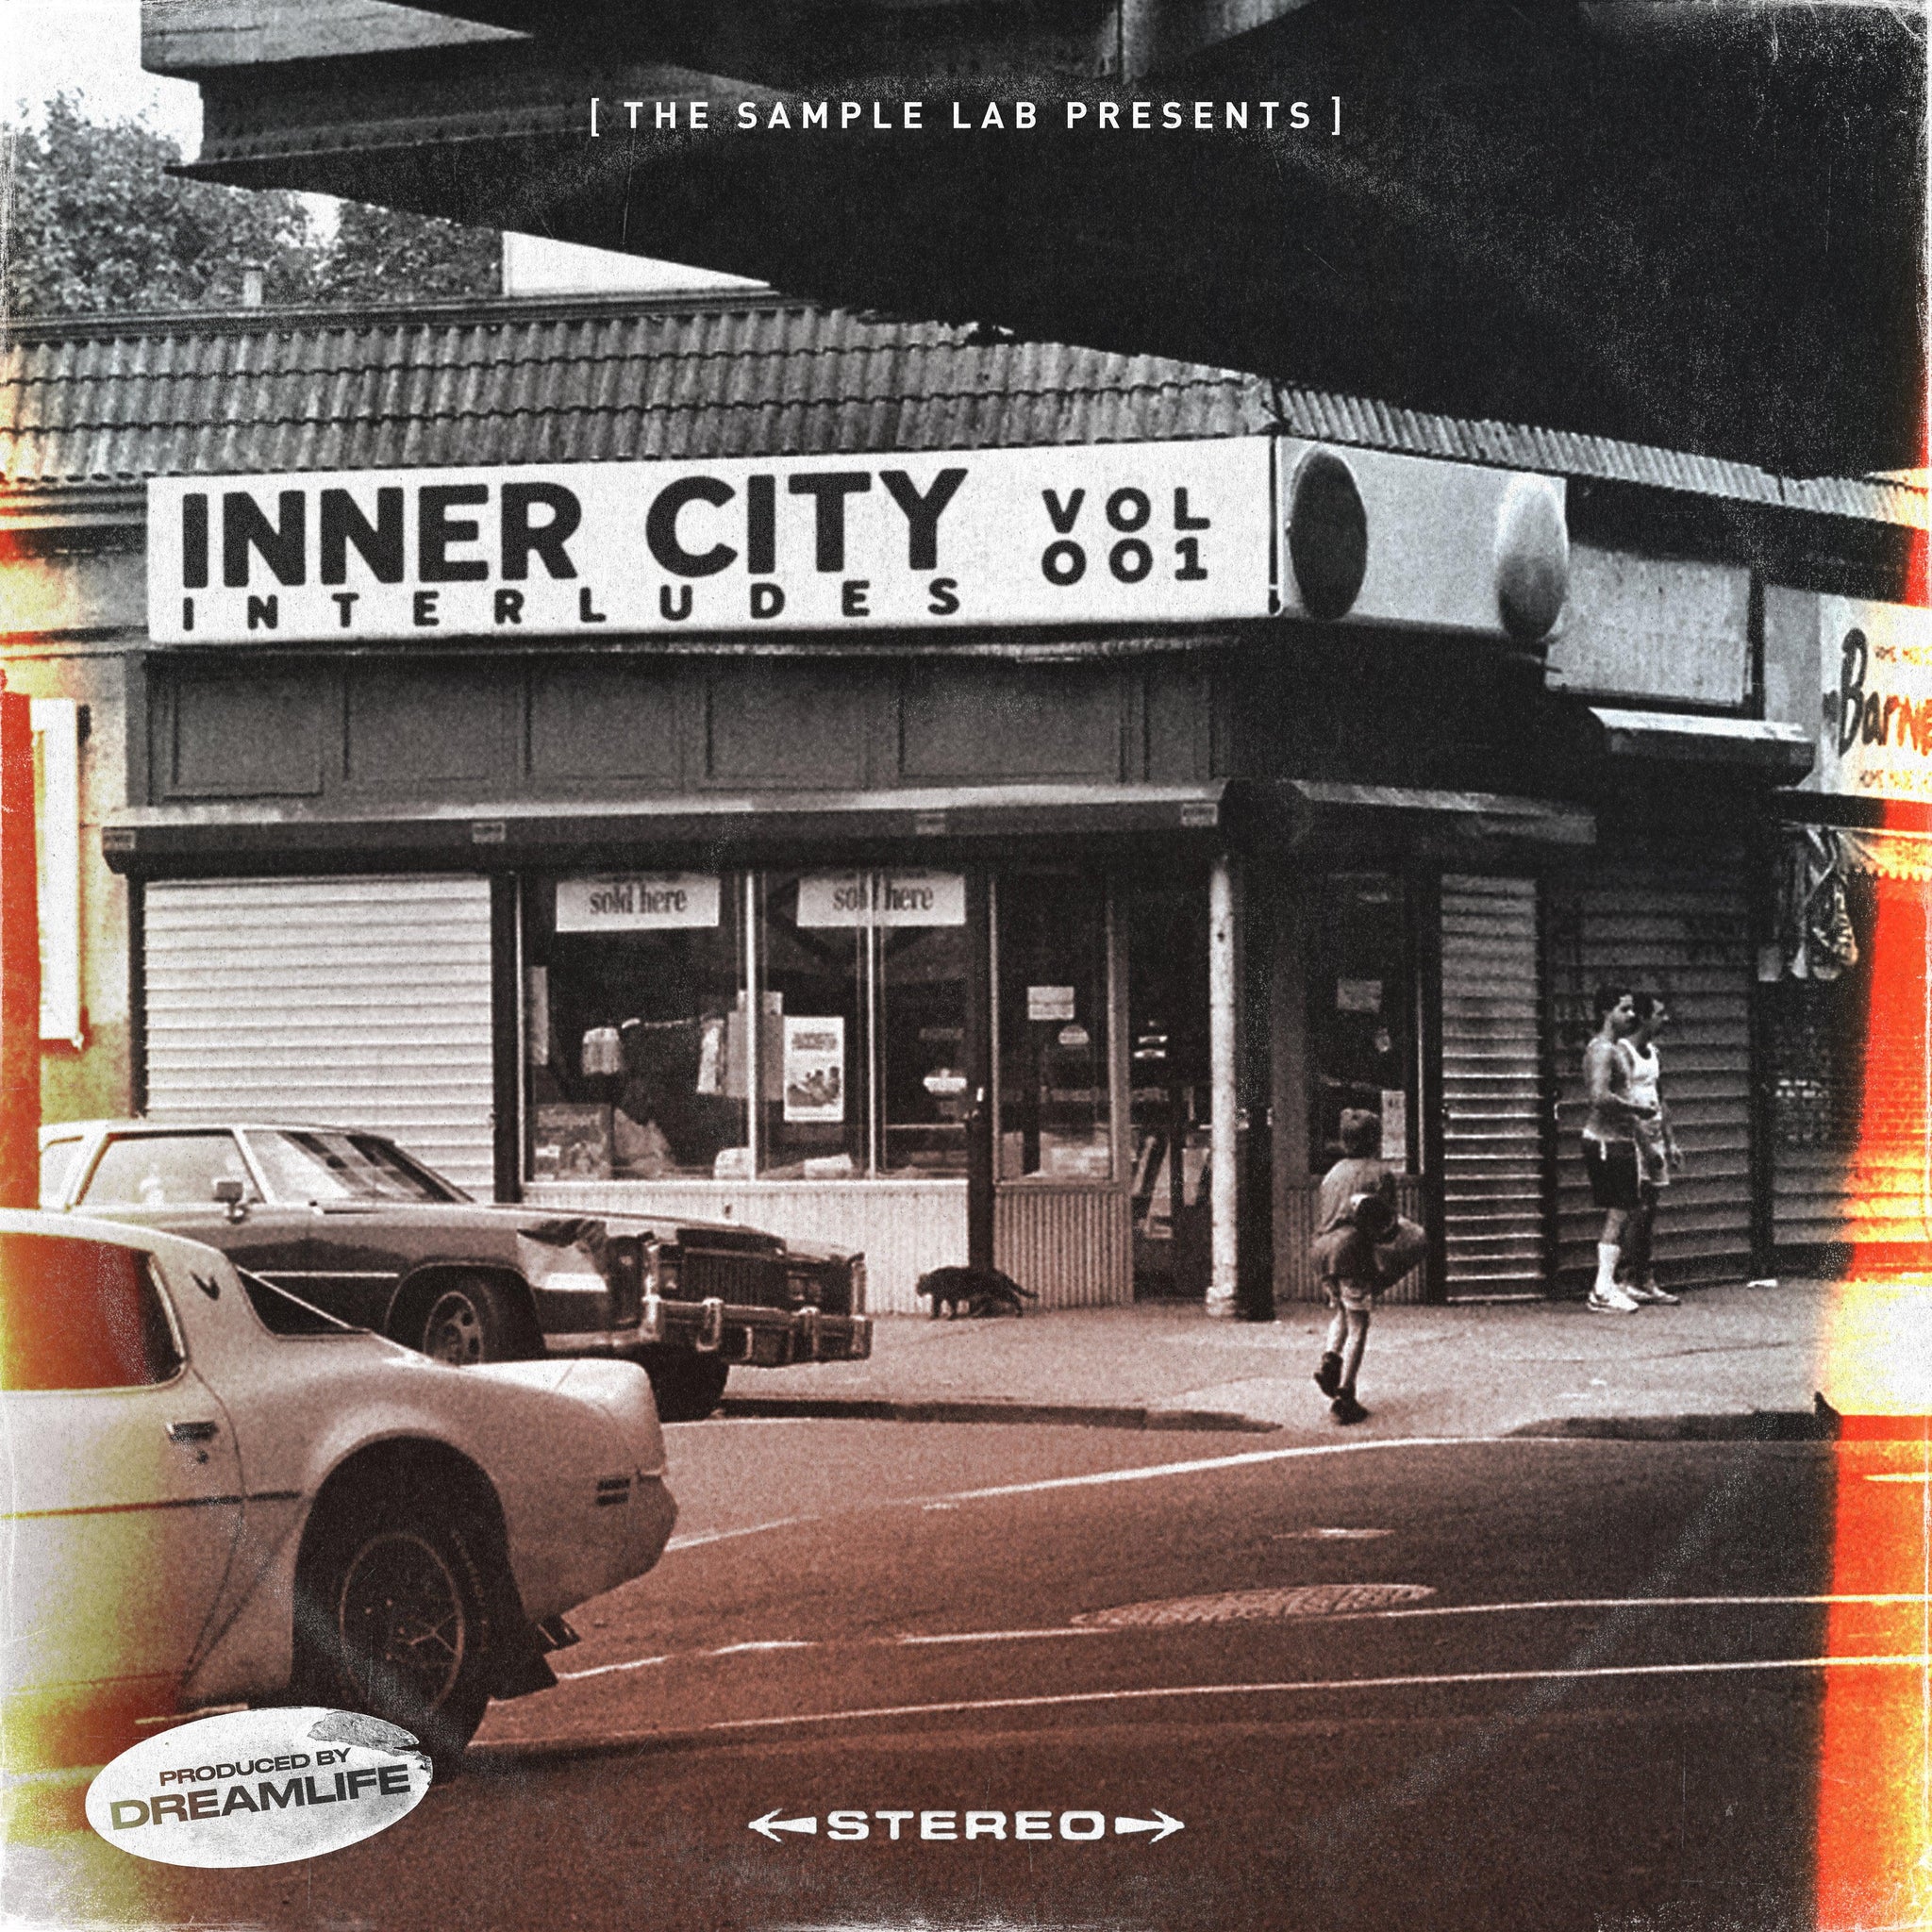 Inner City Interludes Vol. 1 - The Sample Lab